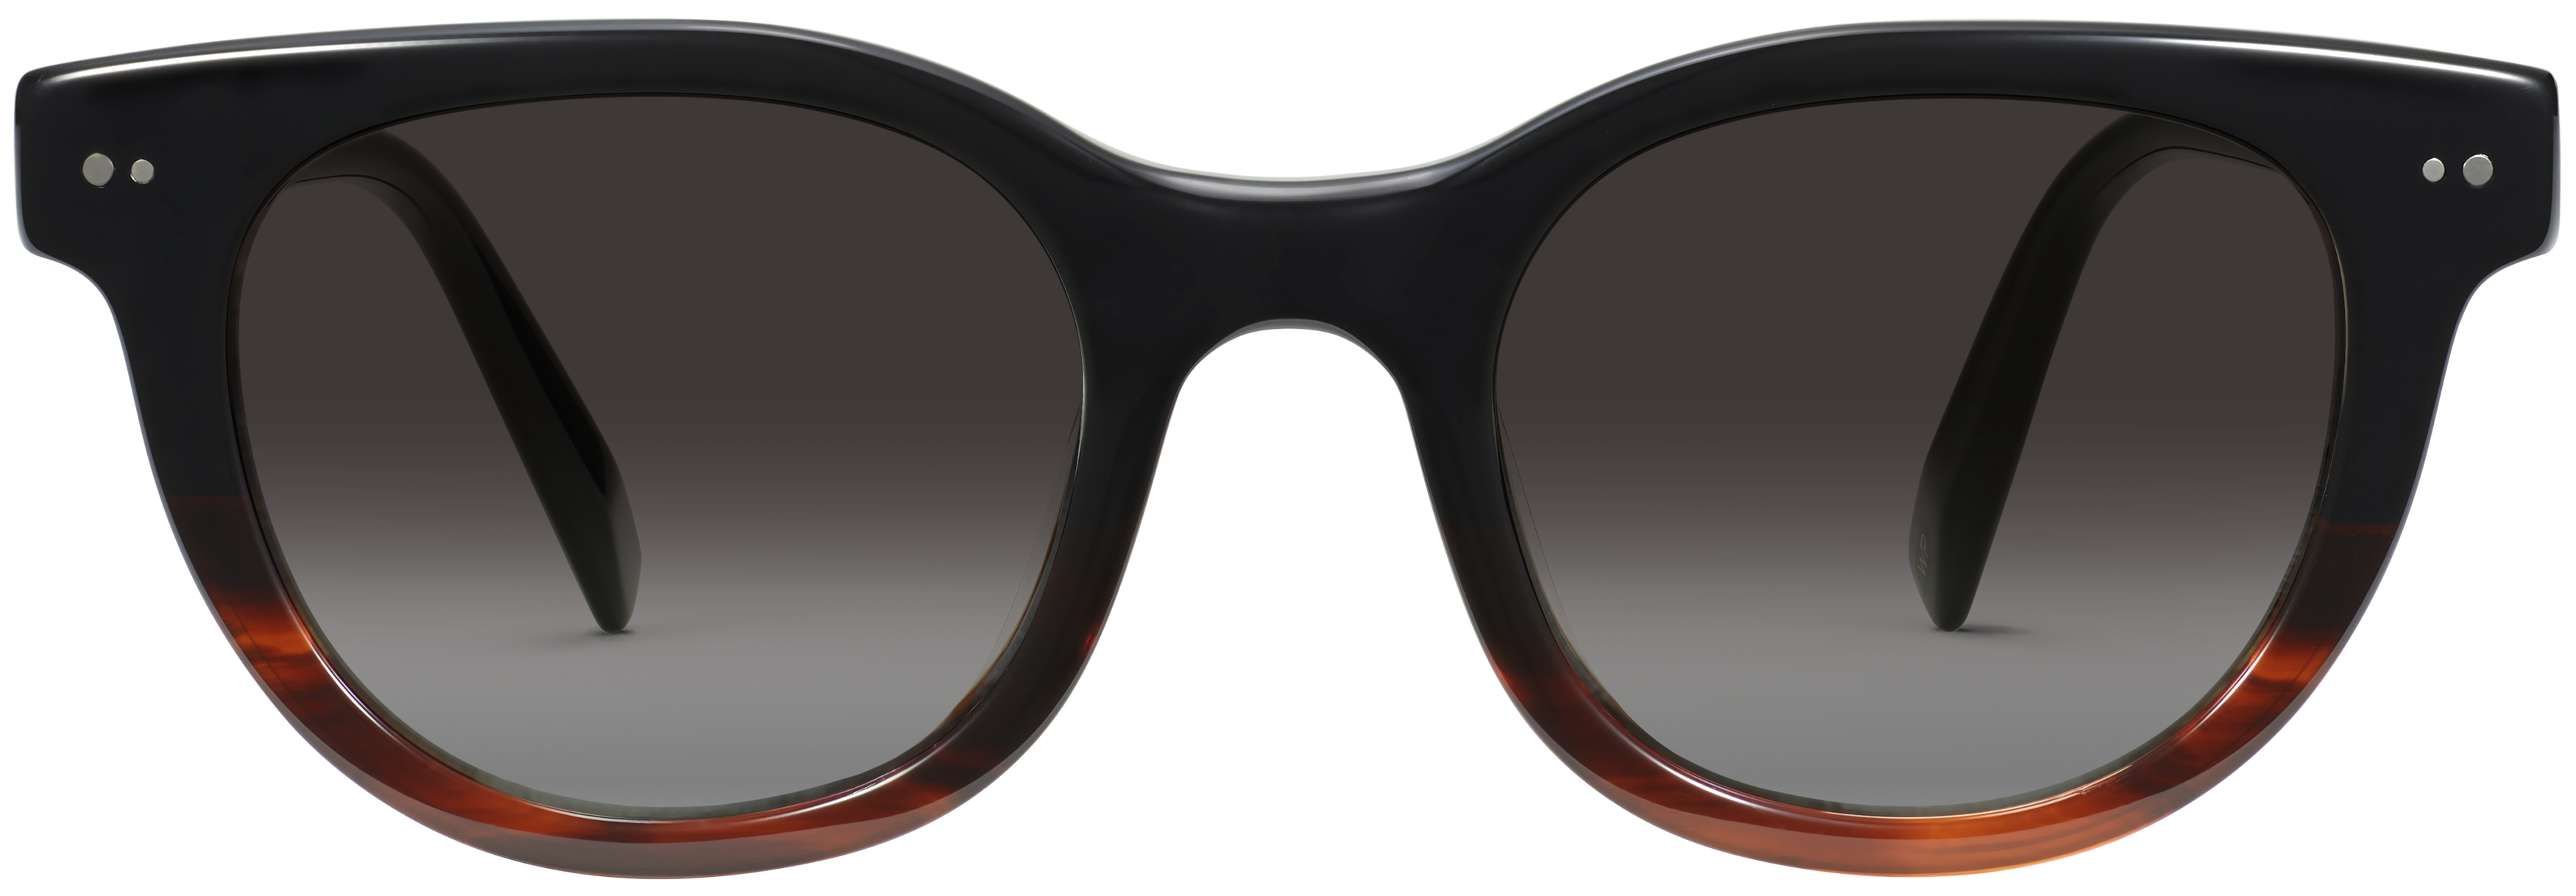 Gideon Sunglasses in Sugar Maple Fade | Warby Parker